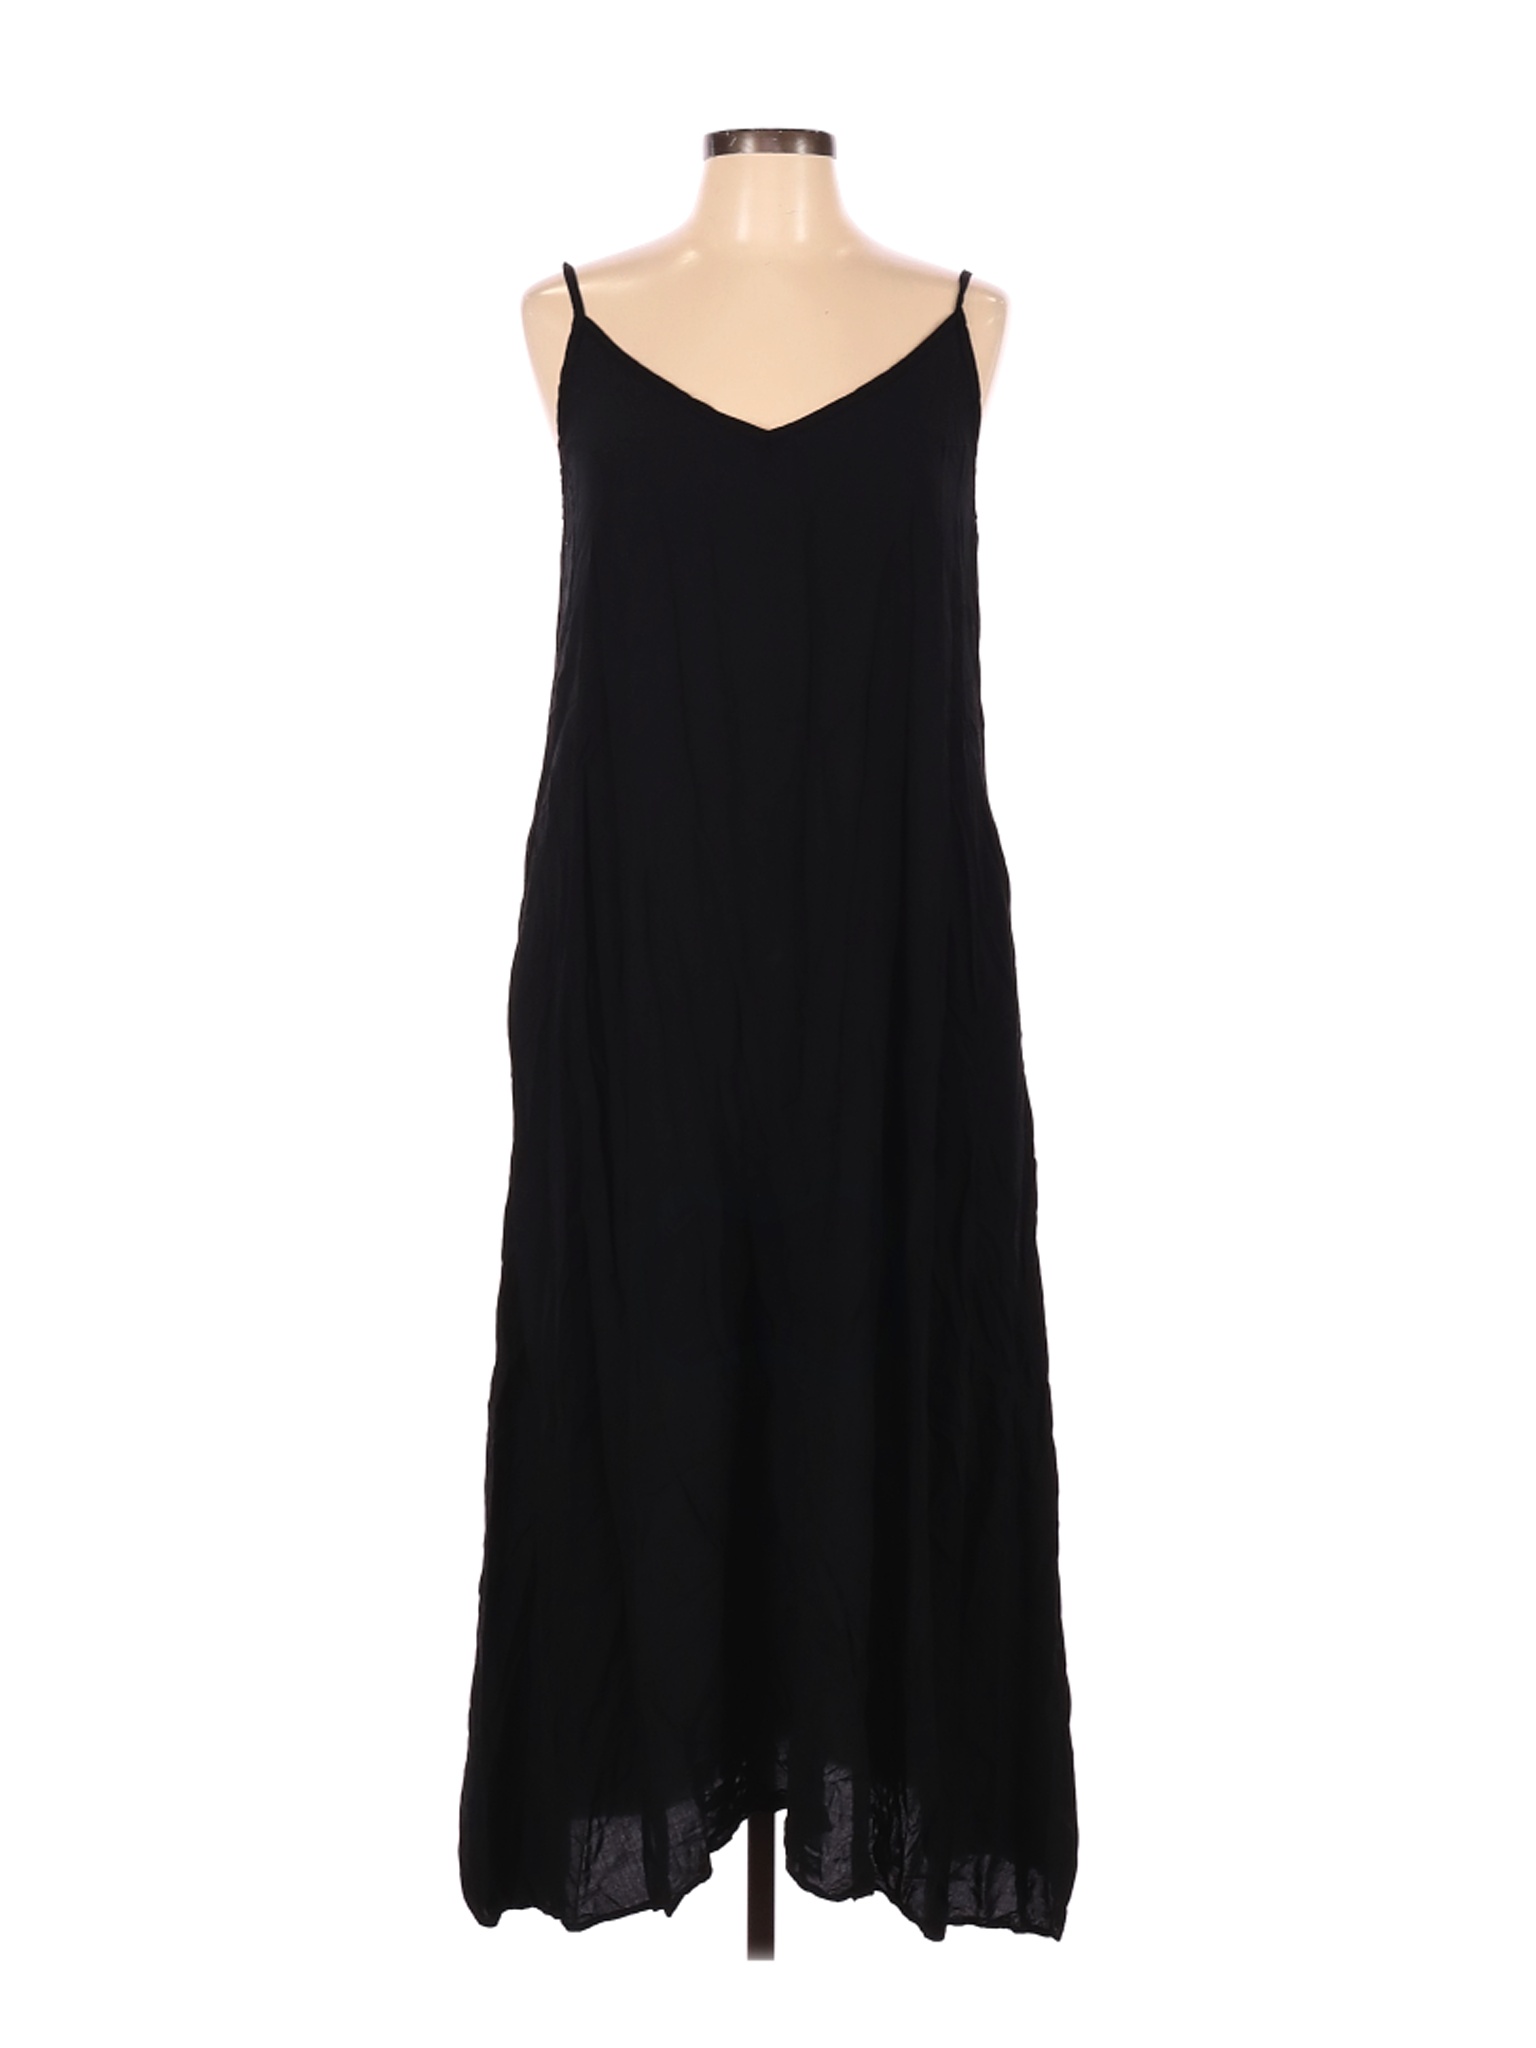 Zanzea Collection Women Black Casual Dress 10 | eBay